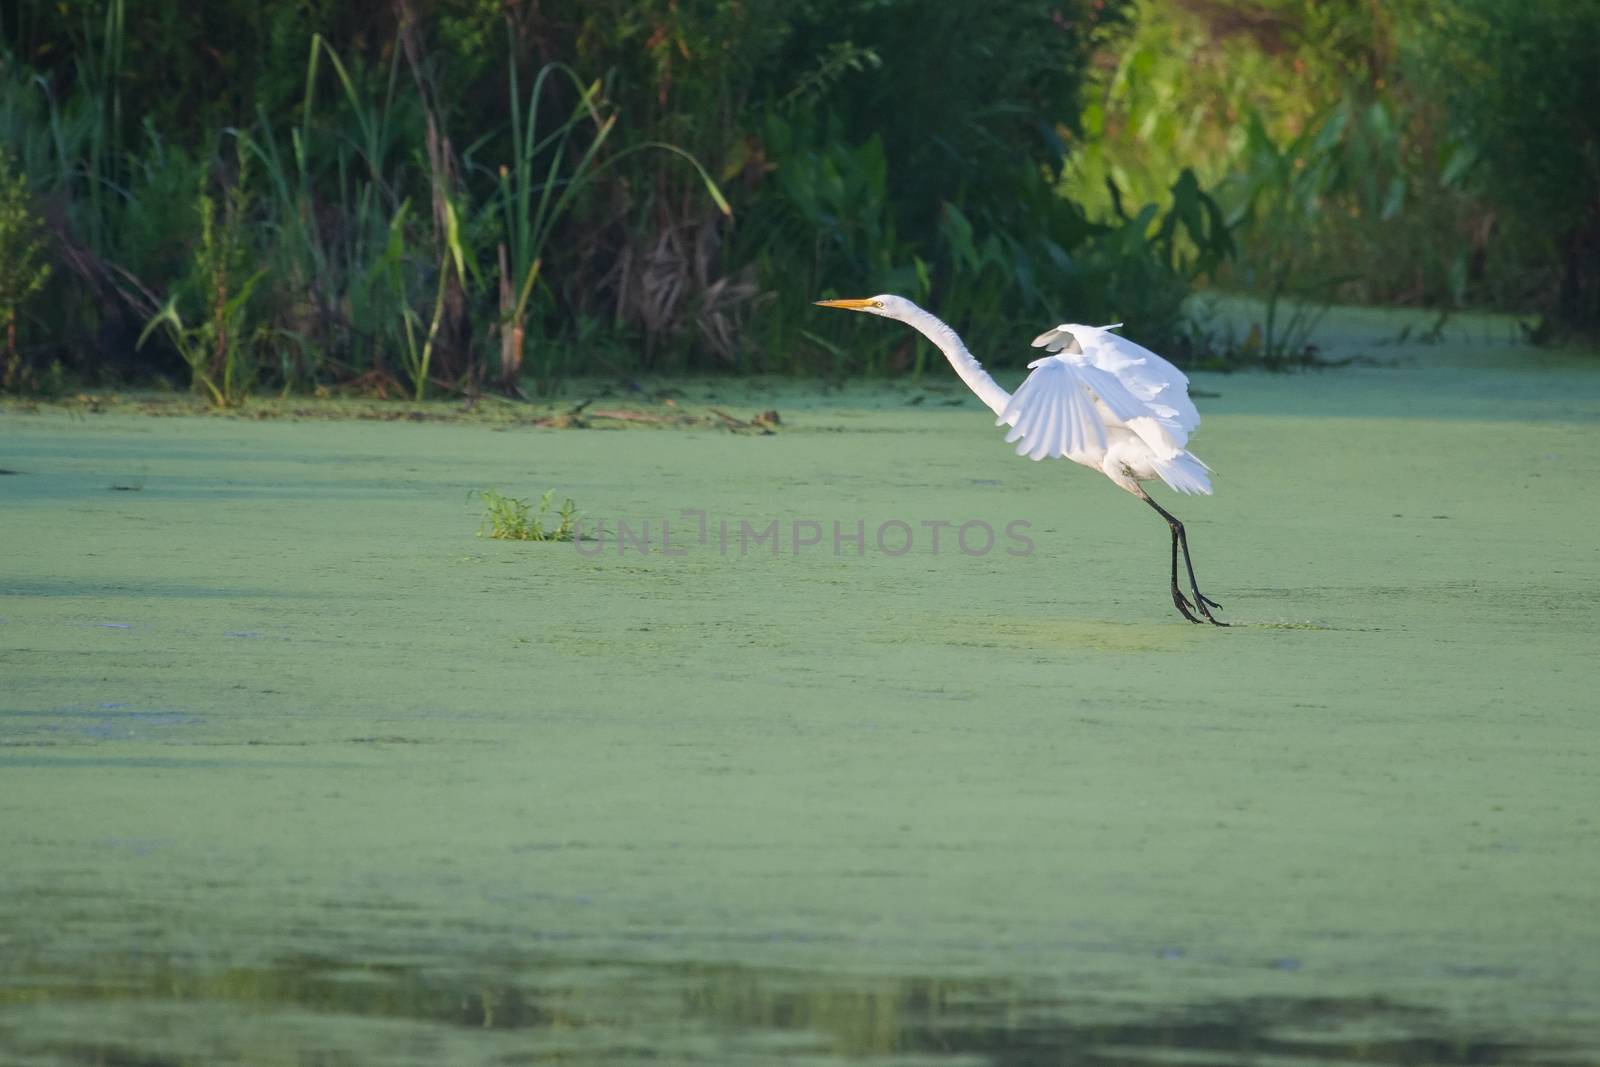 Great White Egret landing in a swamp.